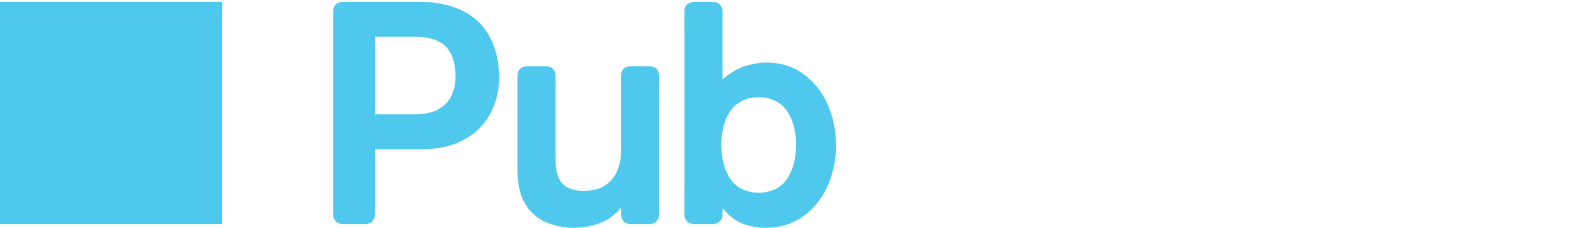 PubMatic Logo groß für dunkle Hintergründe (transparentes PNG)